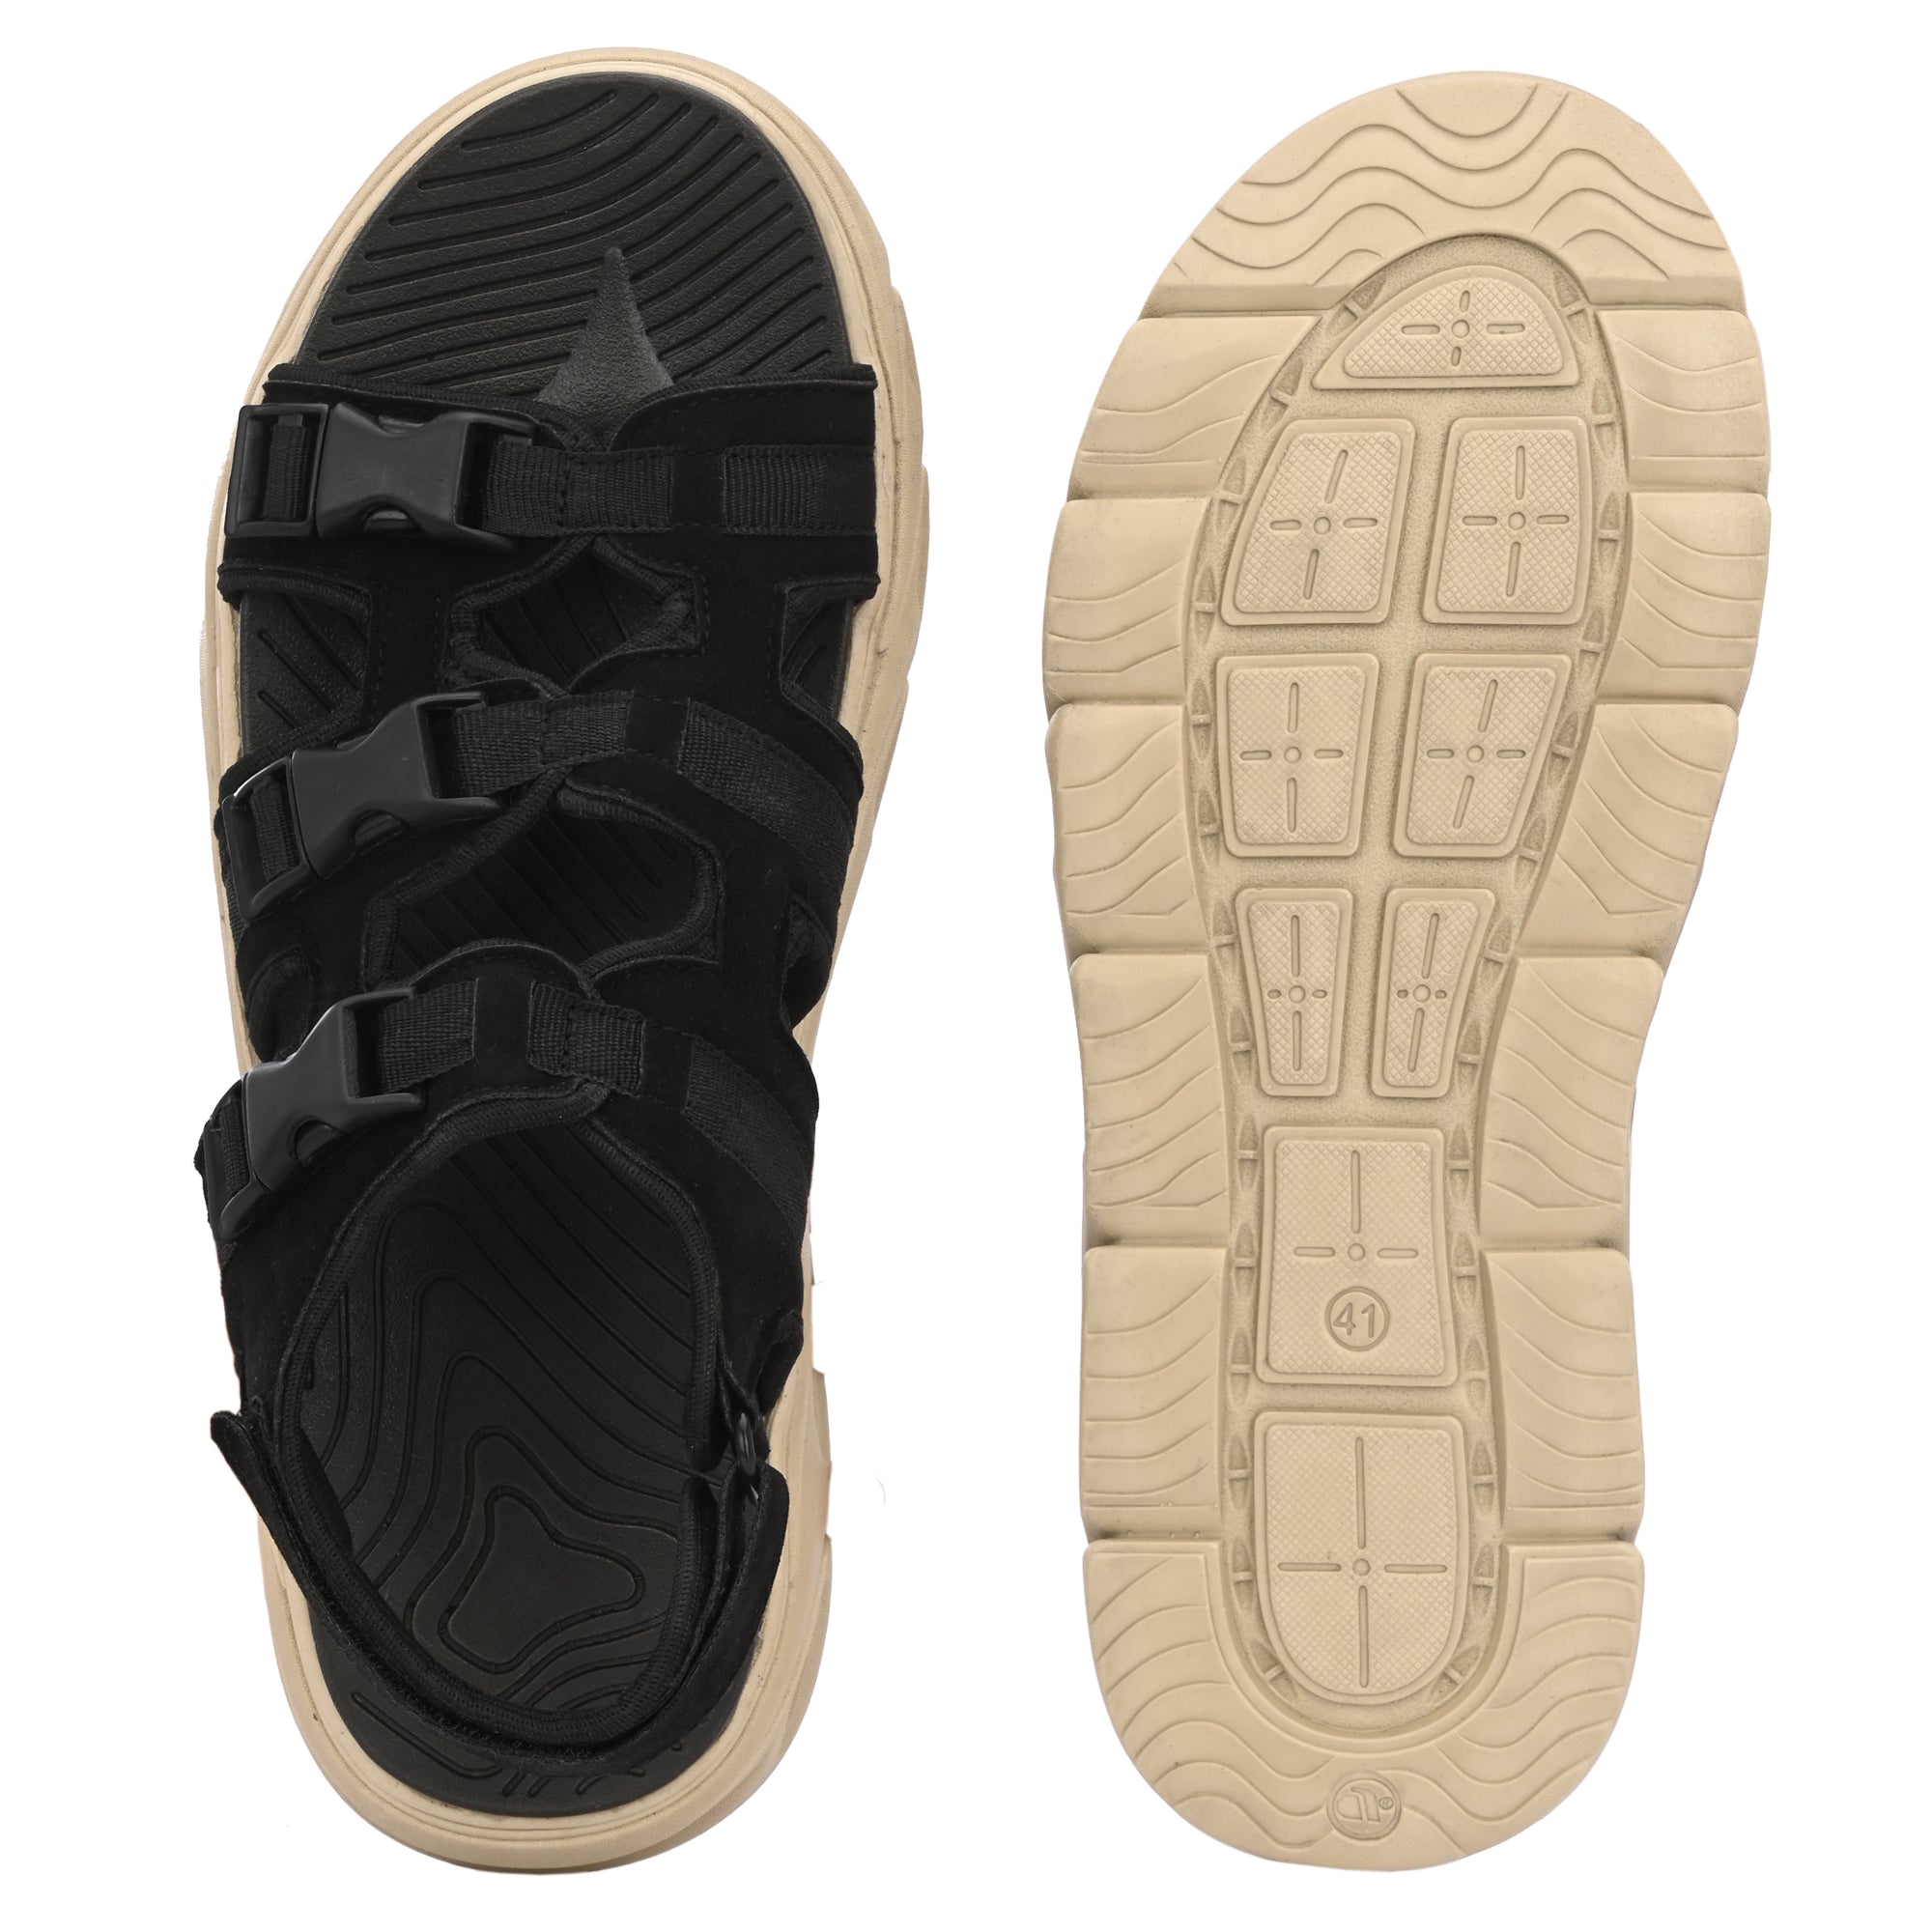 attitudist-mens-handcrafted-black-casual-sandal